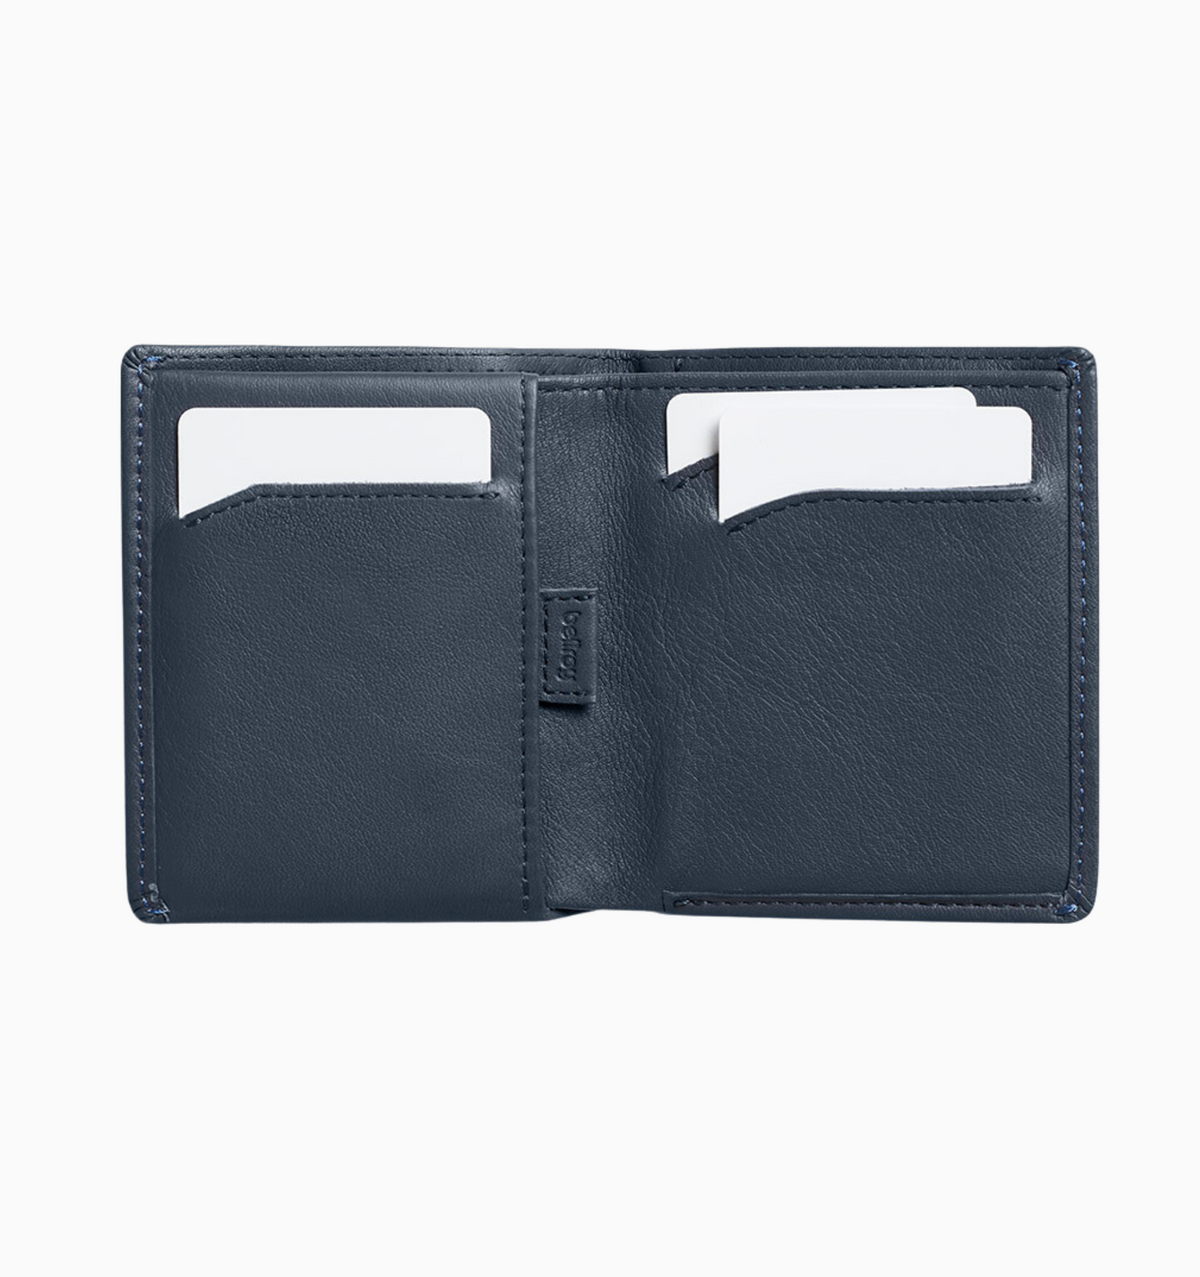 Bellroy Note Sleeve Wallet - Basalt